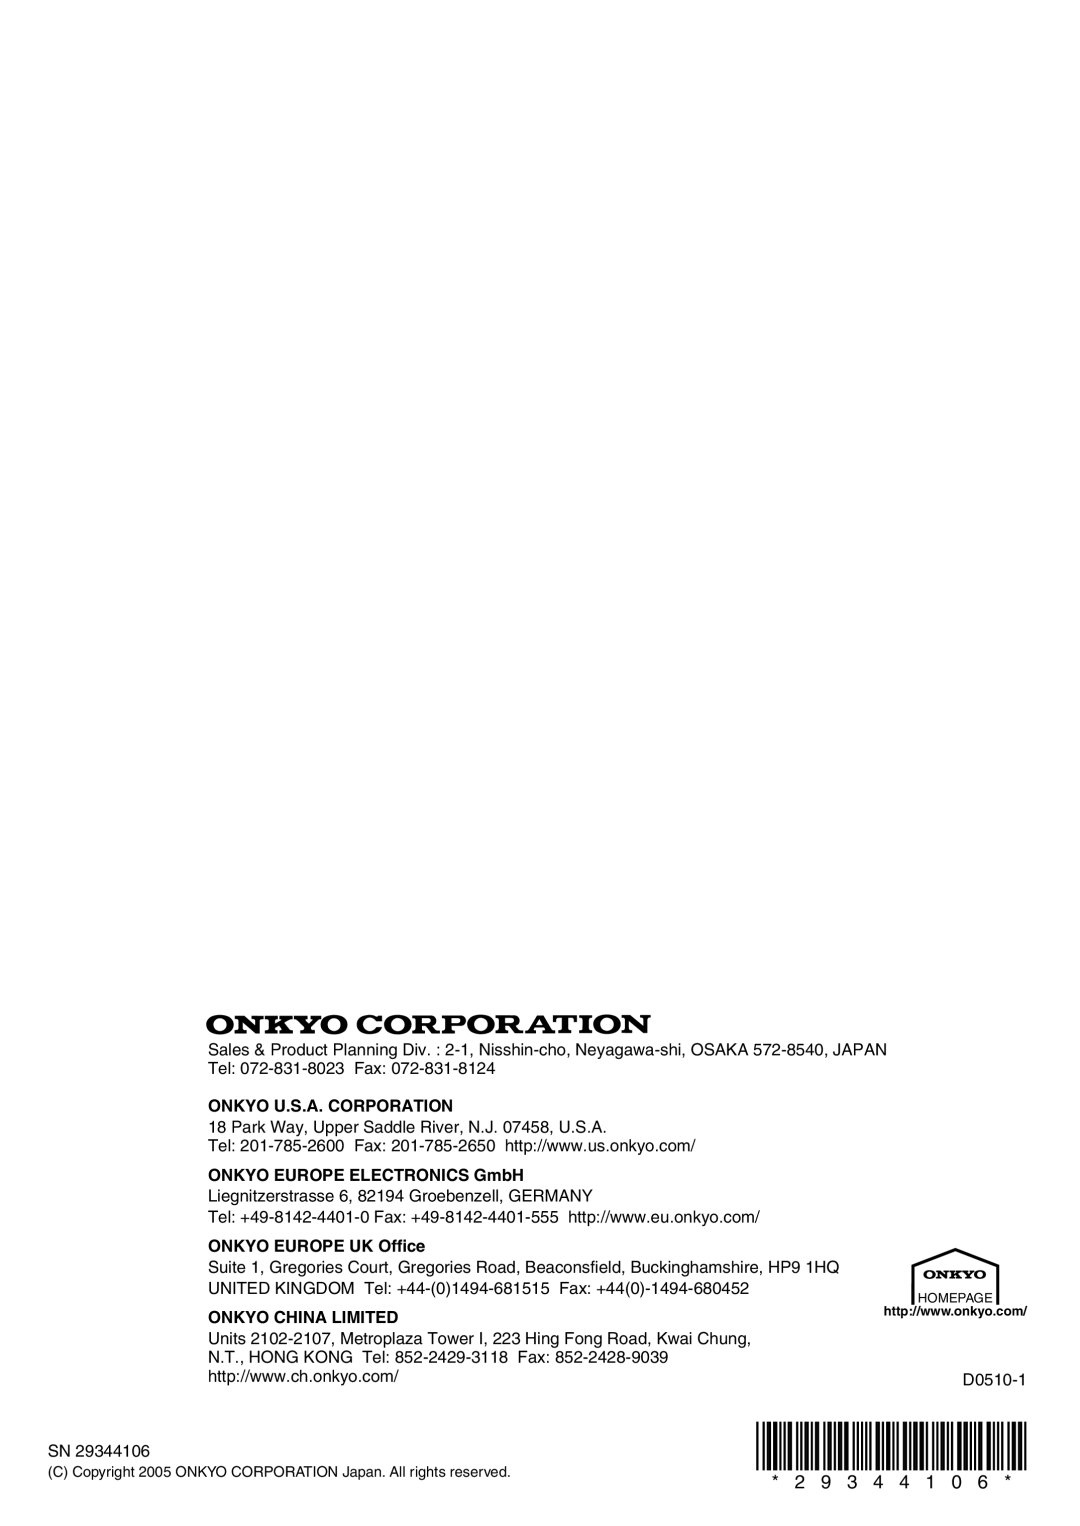 Onkyo DX-7555 2 9, Onkyo U.S.A. Corporation, ONKYO EUROPE ELECTRONICS GmbH, ONKYO EUROPE UK Office, Onkyo China Limited 